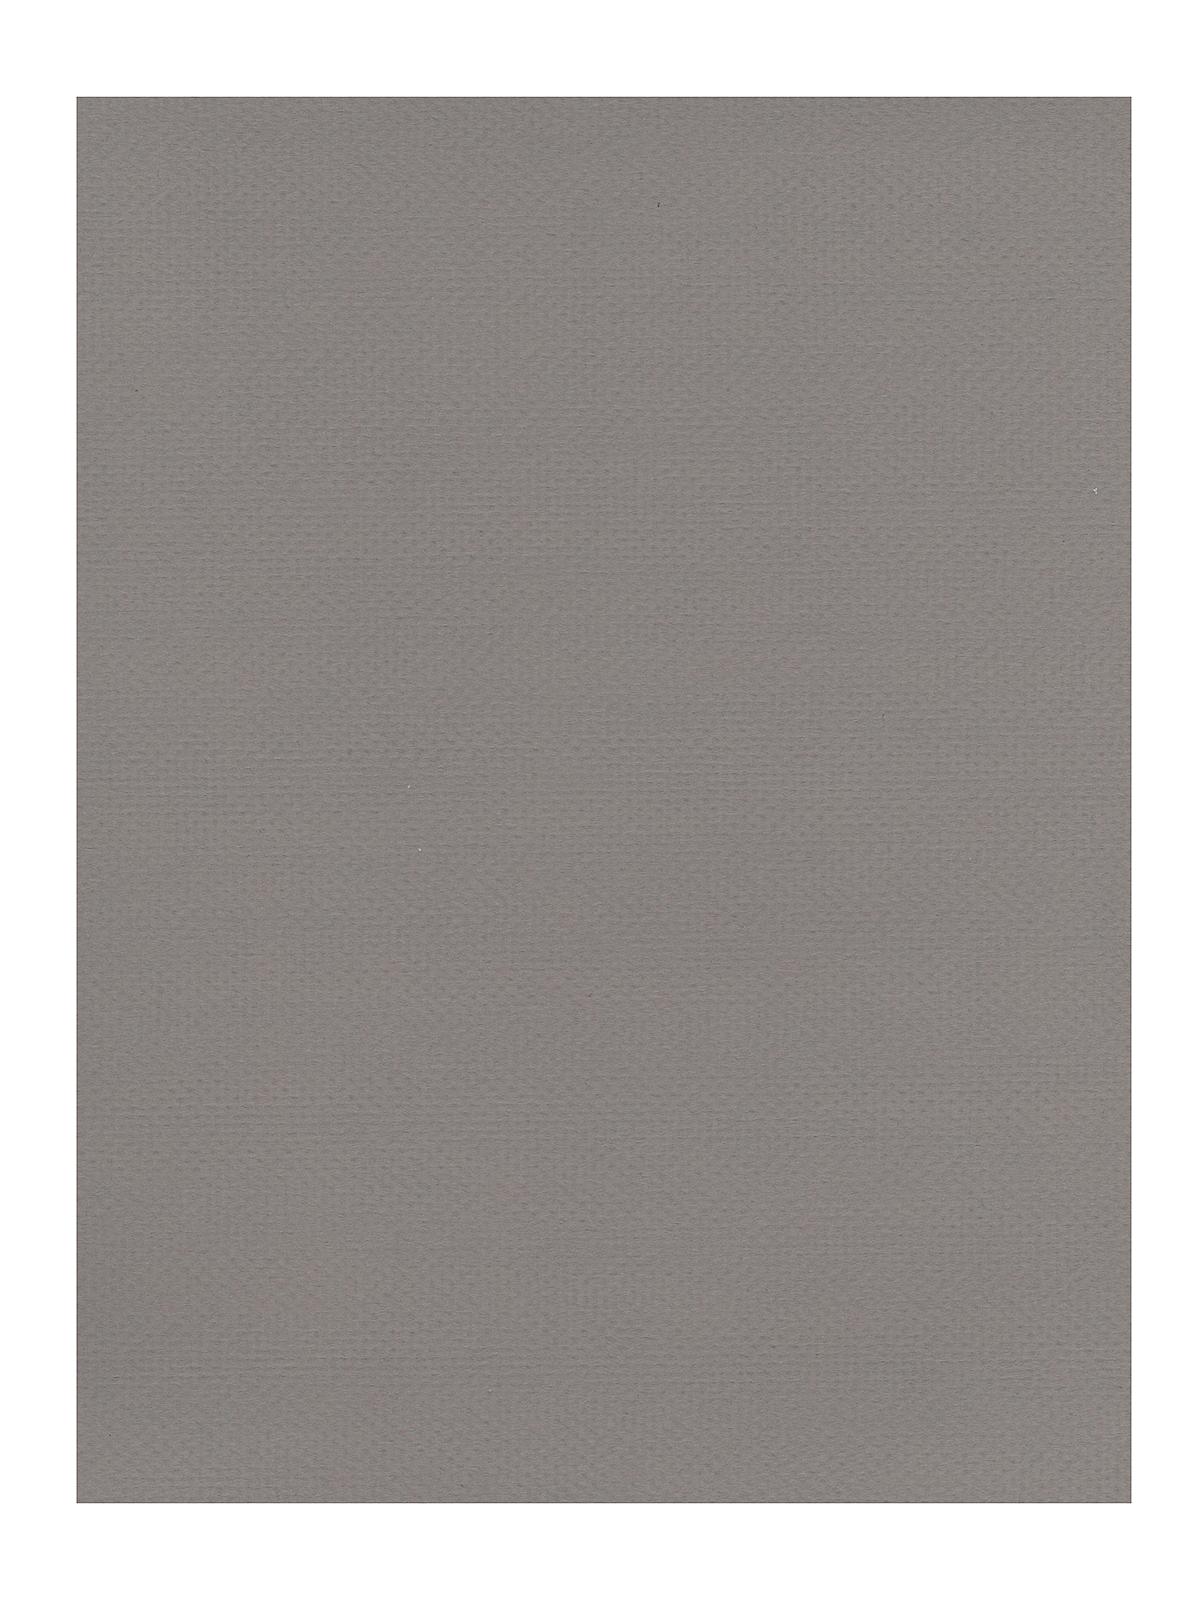 400 Series Textured Art Papers Smoke Gray